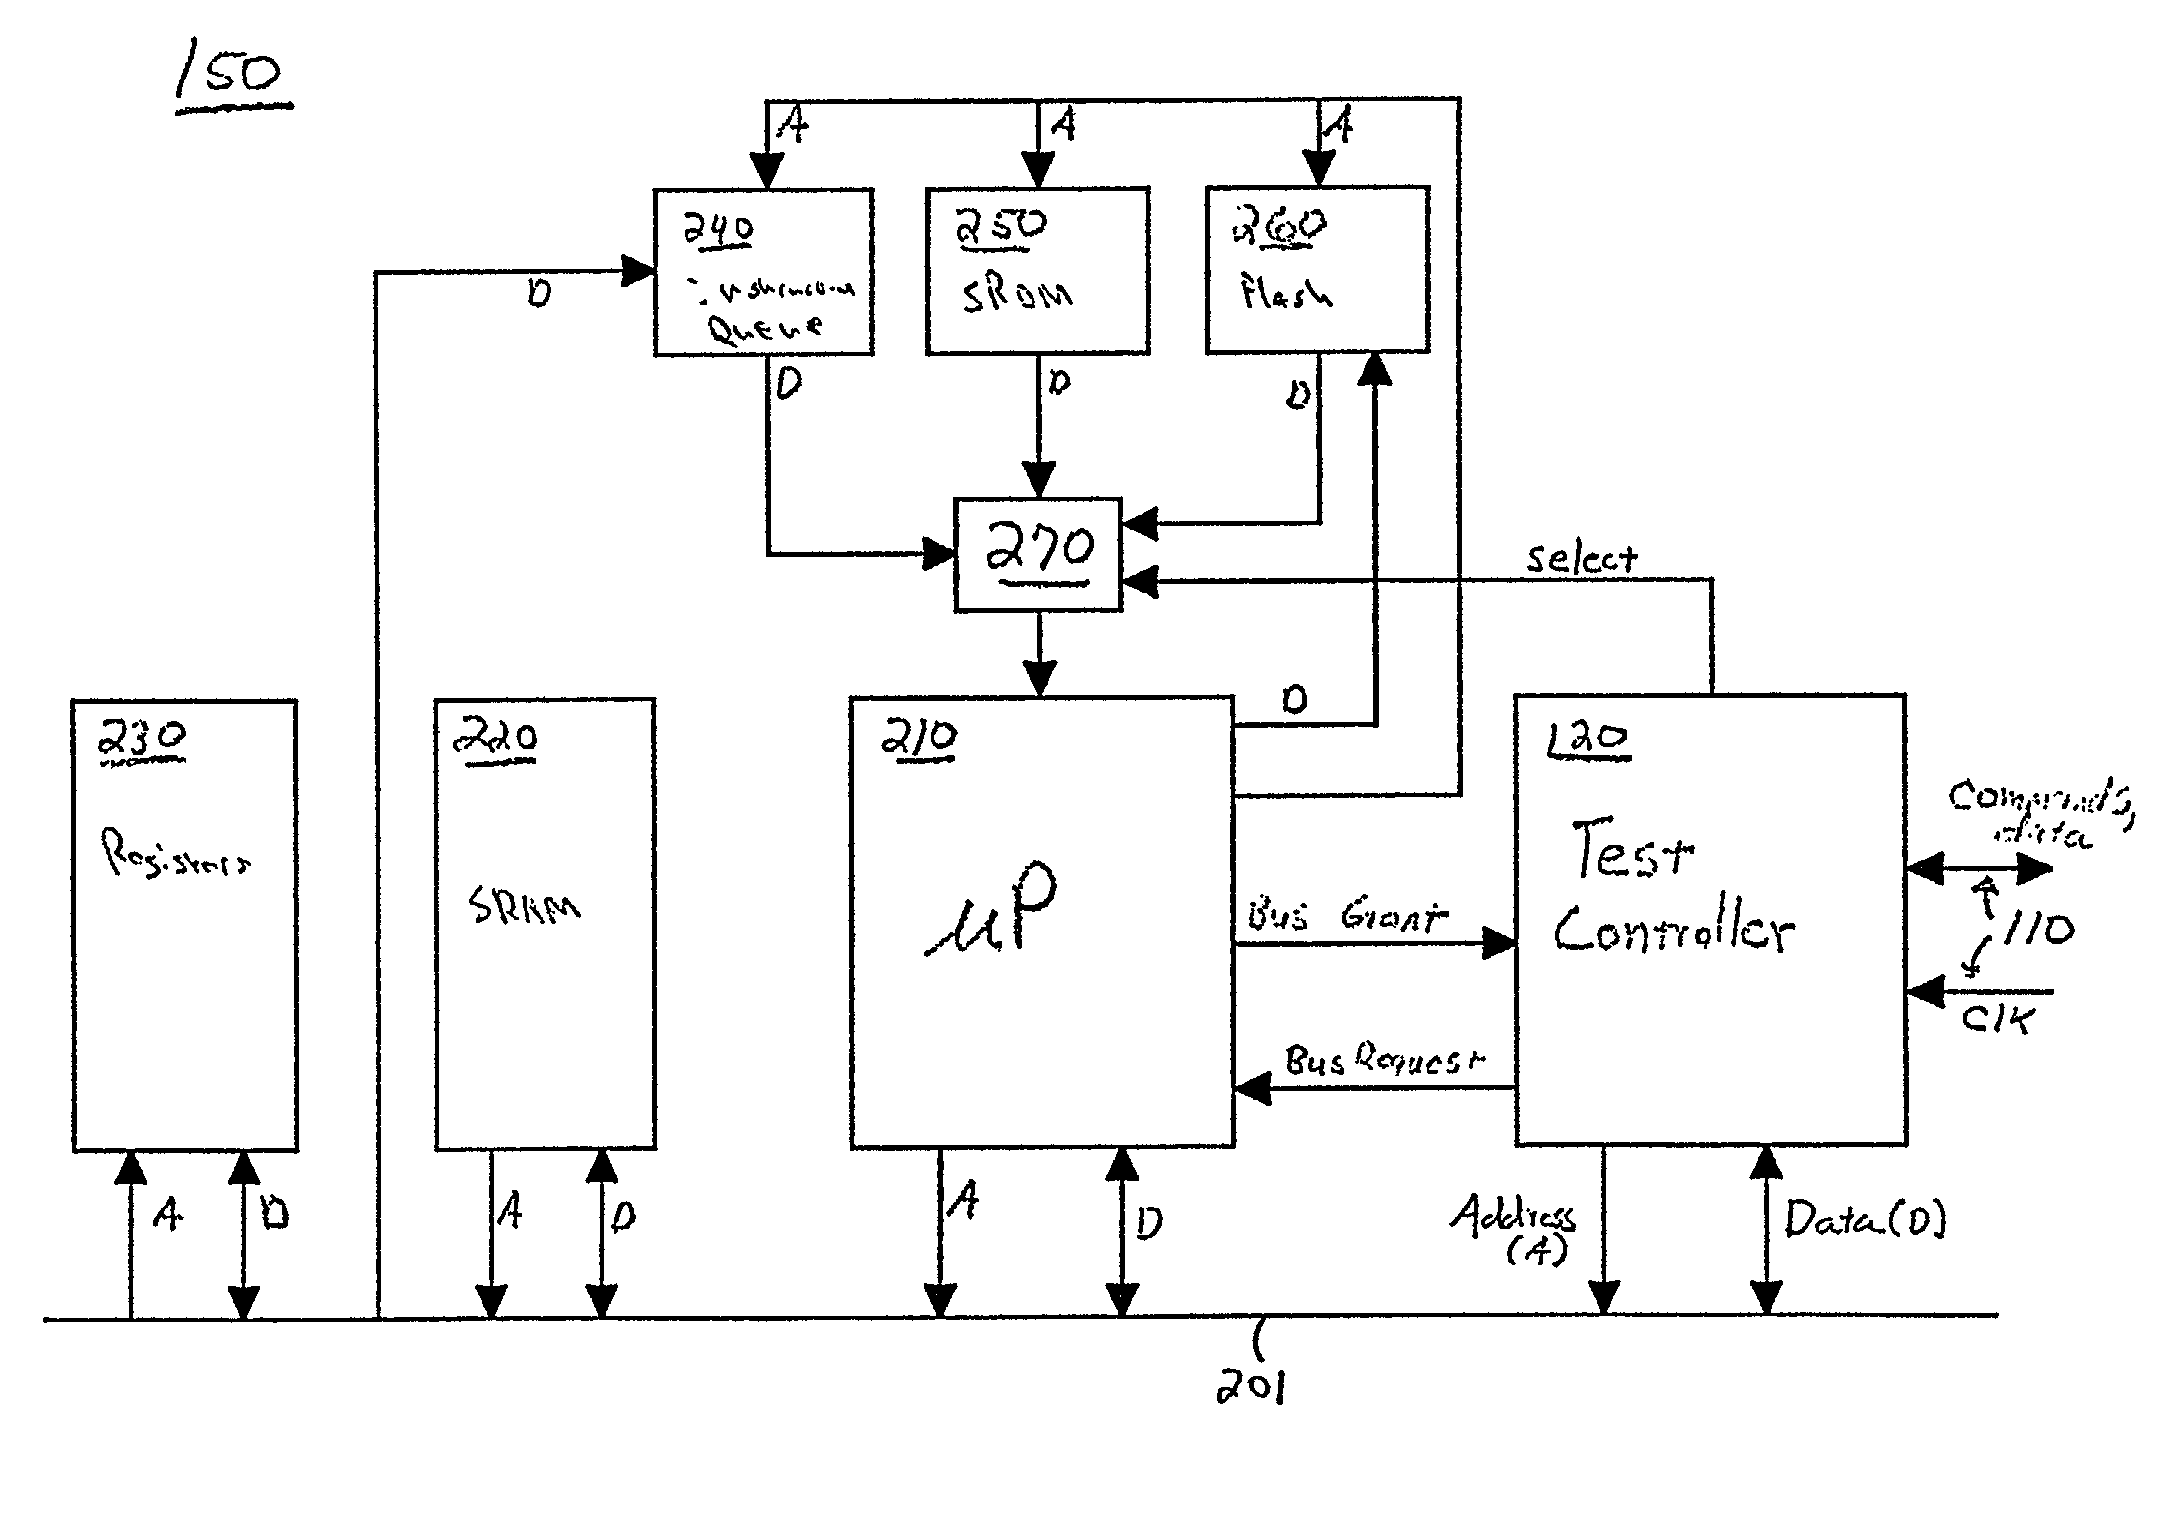 Method for entering circuit test mode